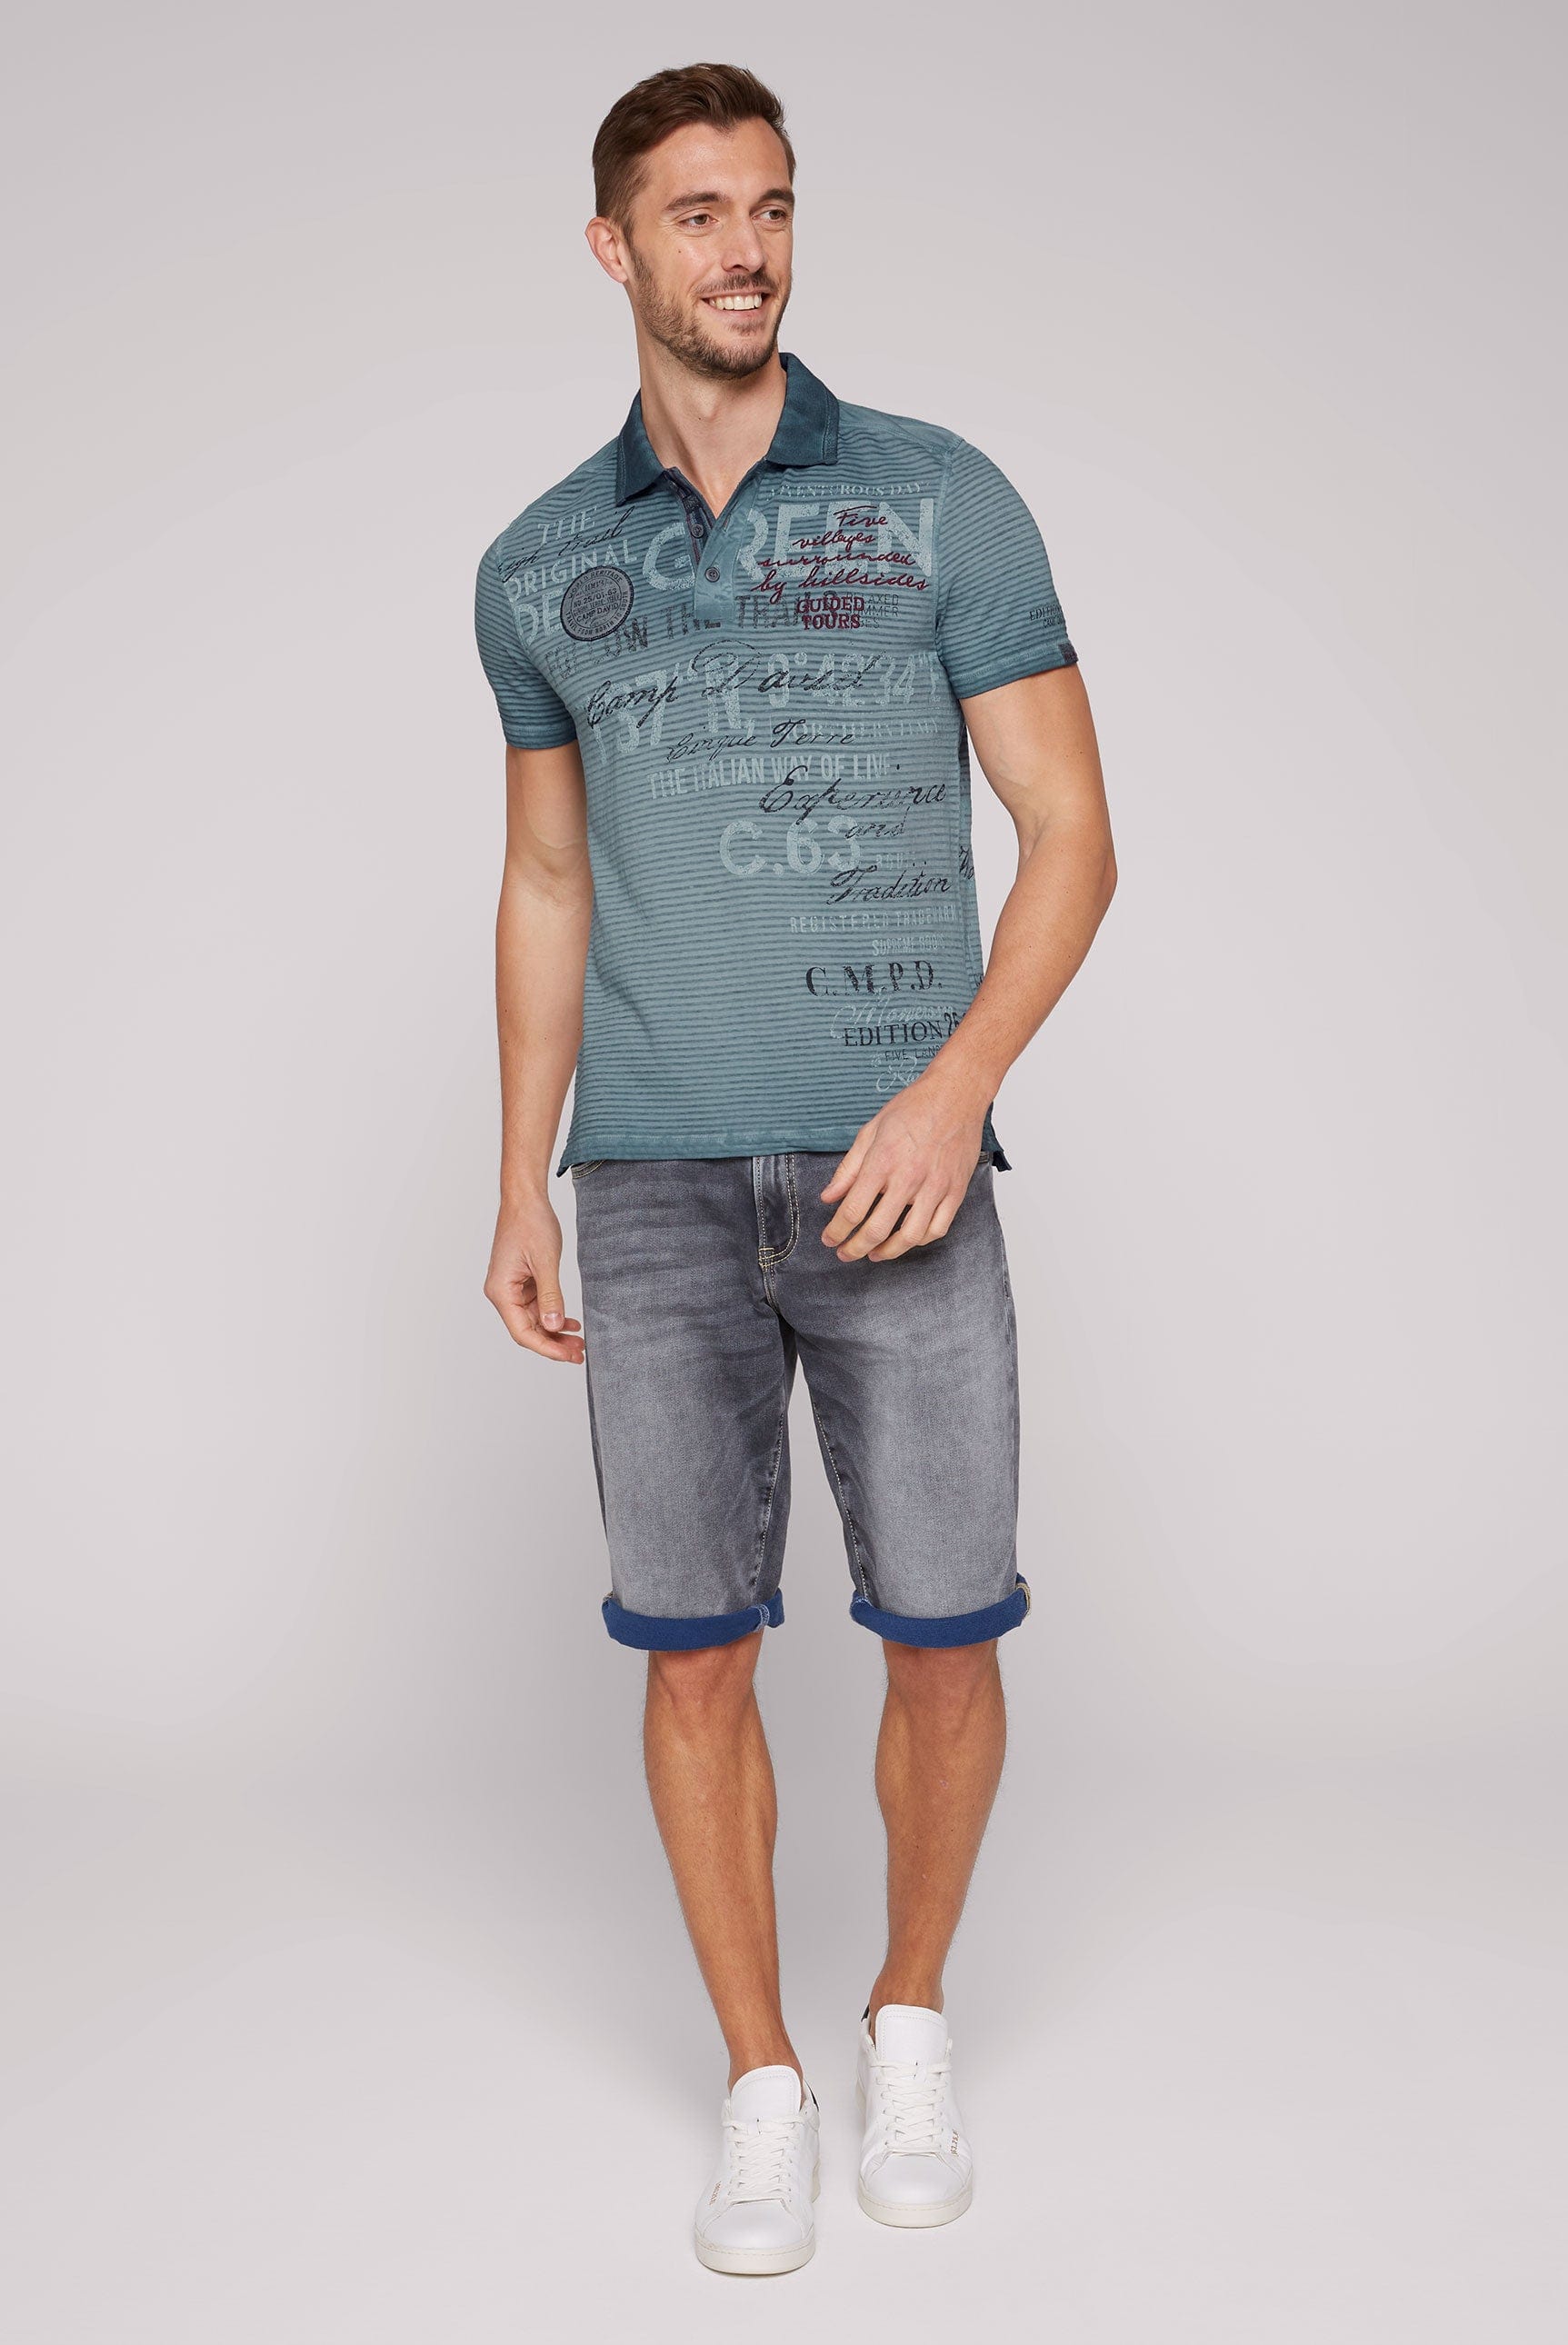 Camp David Poloshirt, short sleeves, blue steel Fashion Stateshop 